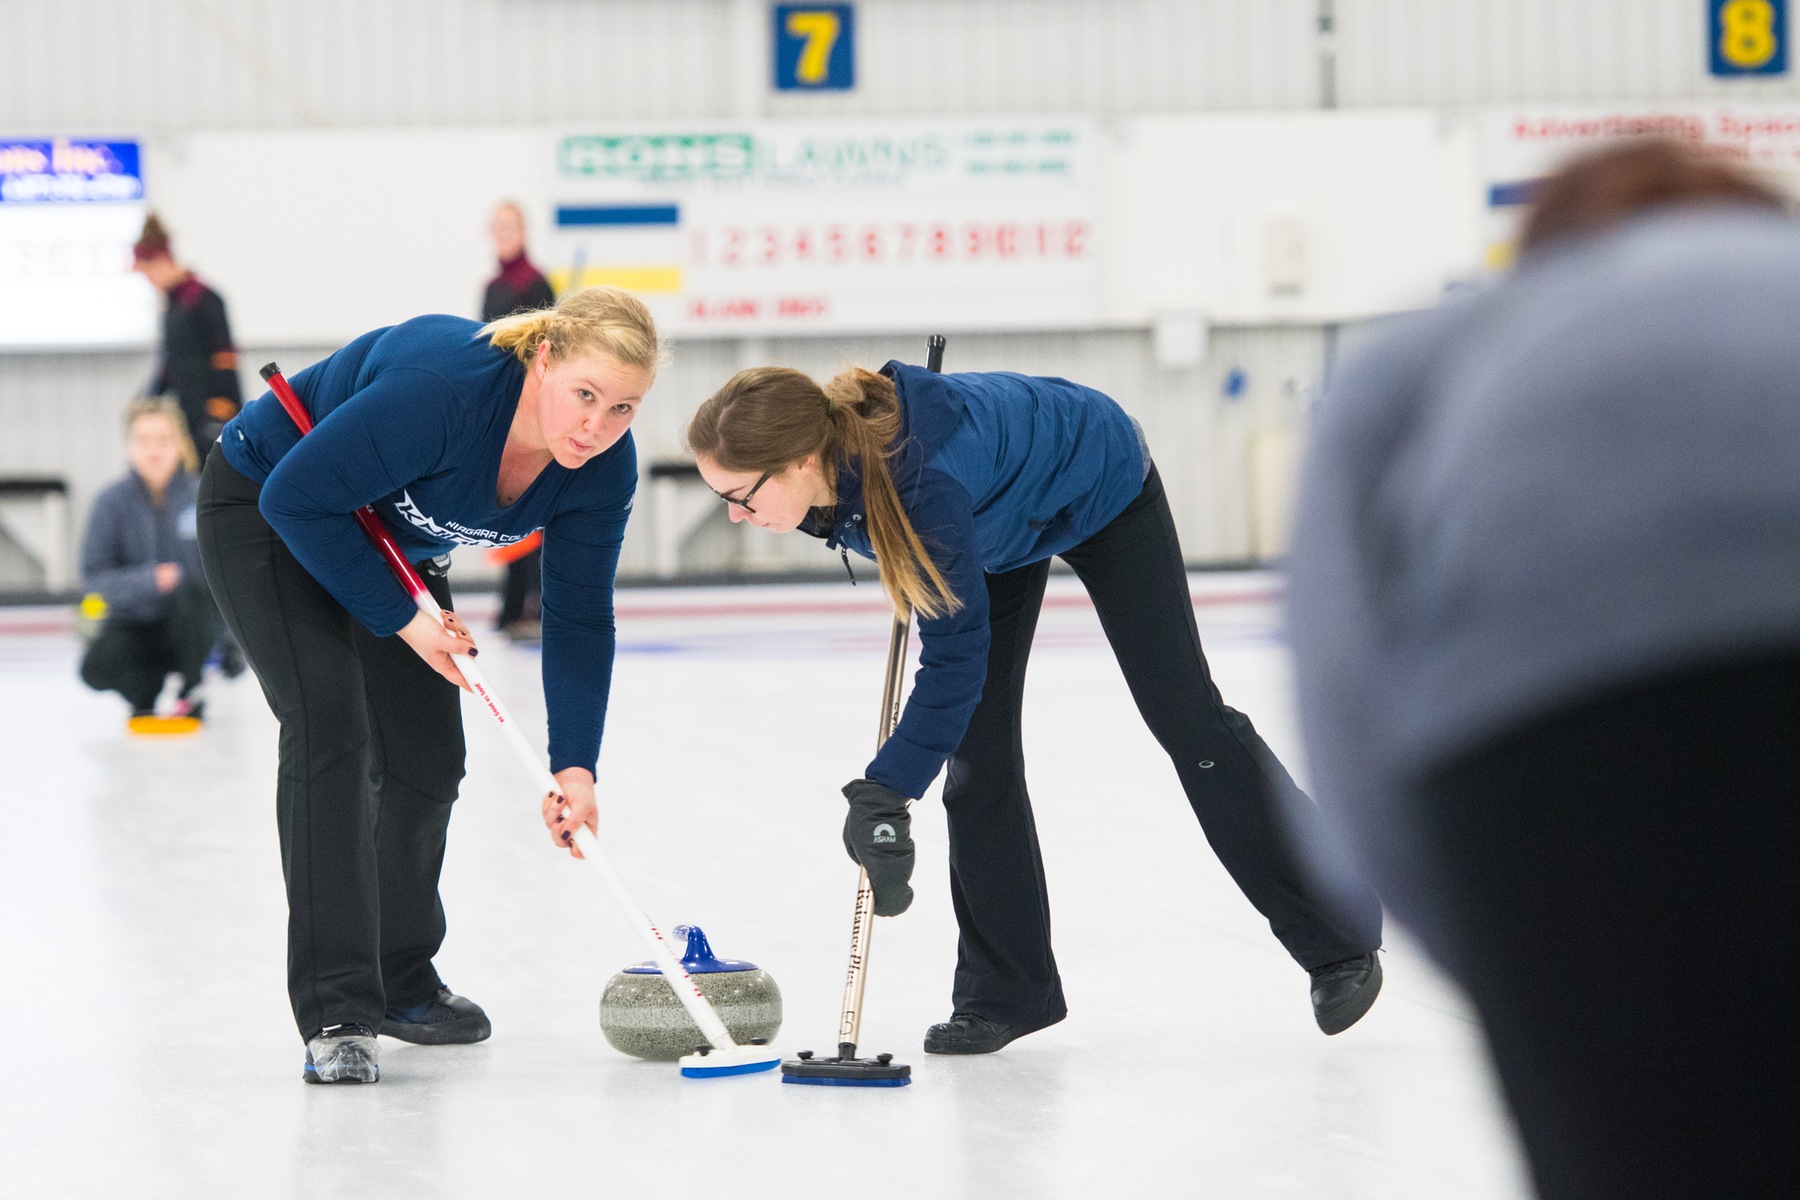 RECAP: Women's curling wrap up 2016-17 season